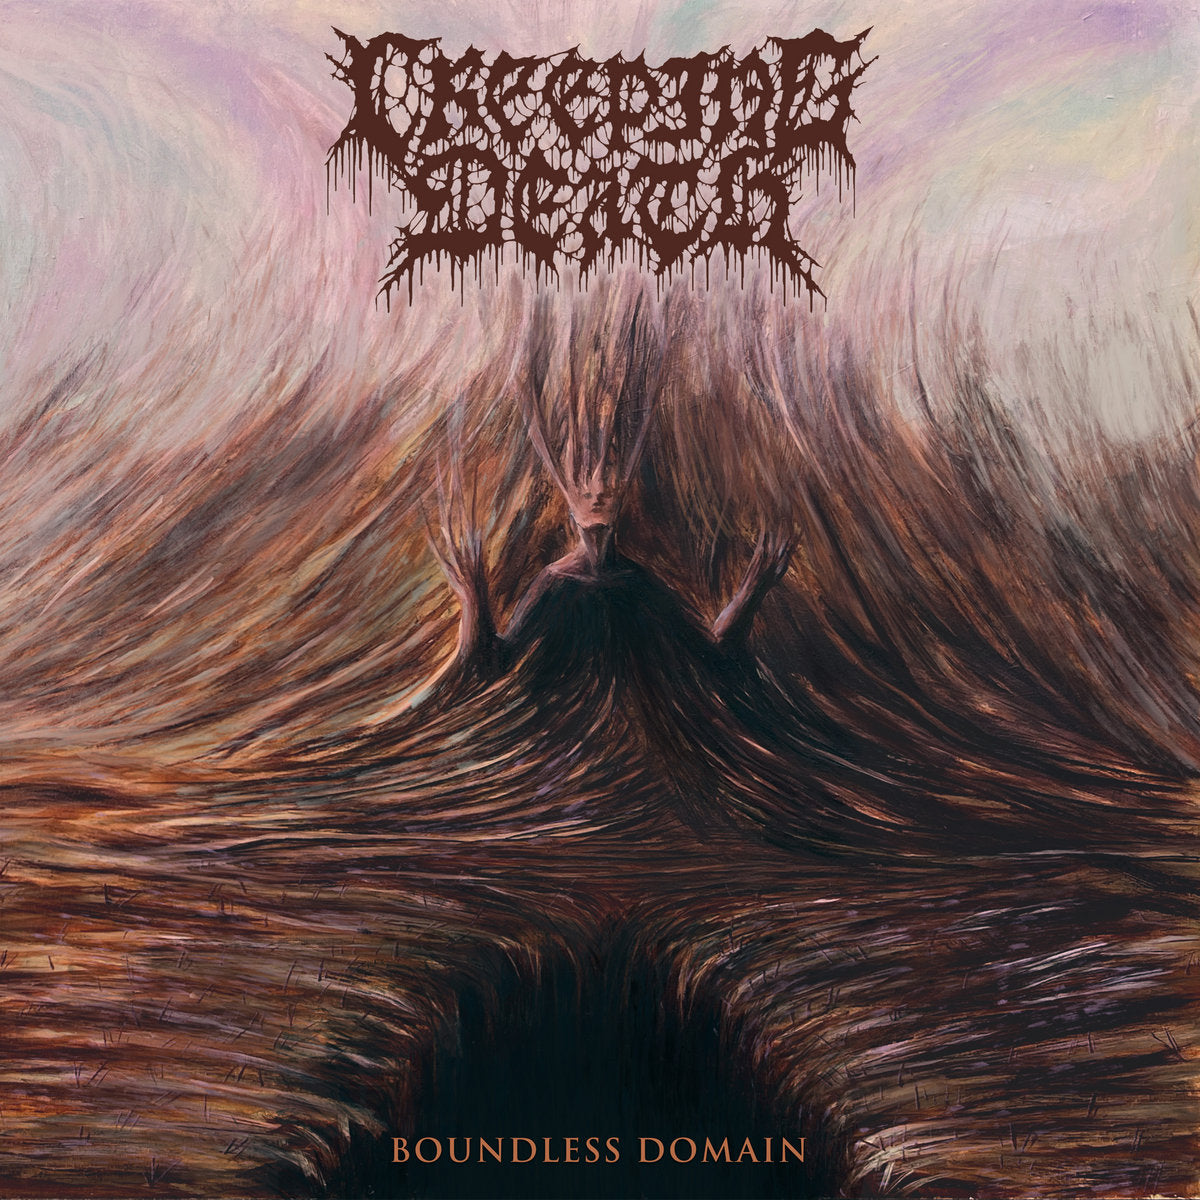 Creeping Death "Boundless Domain" 12" Vinyl